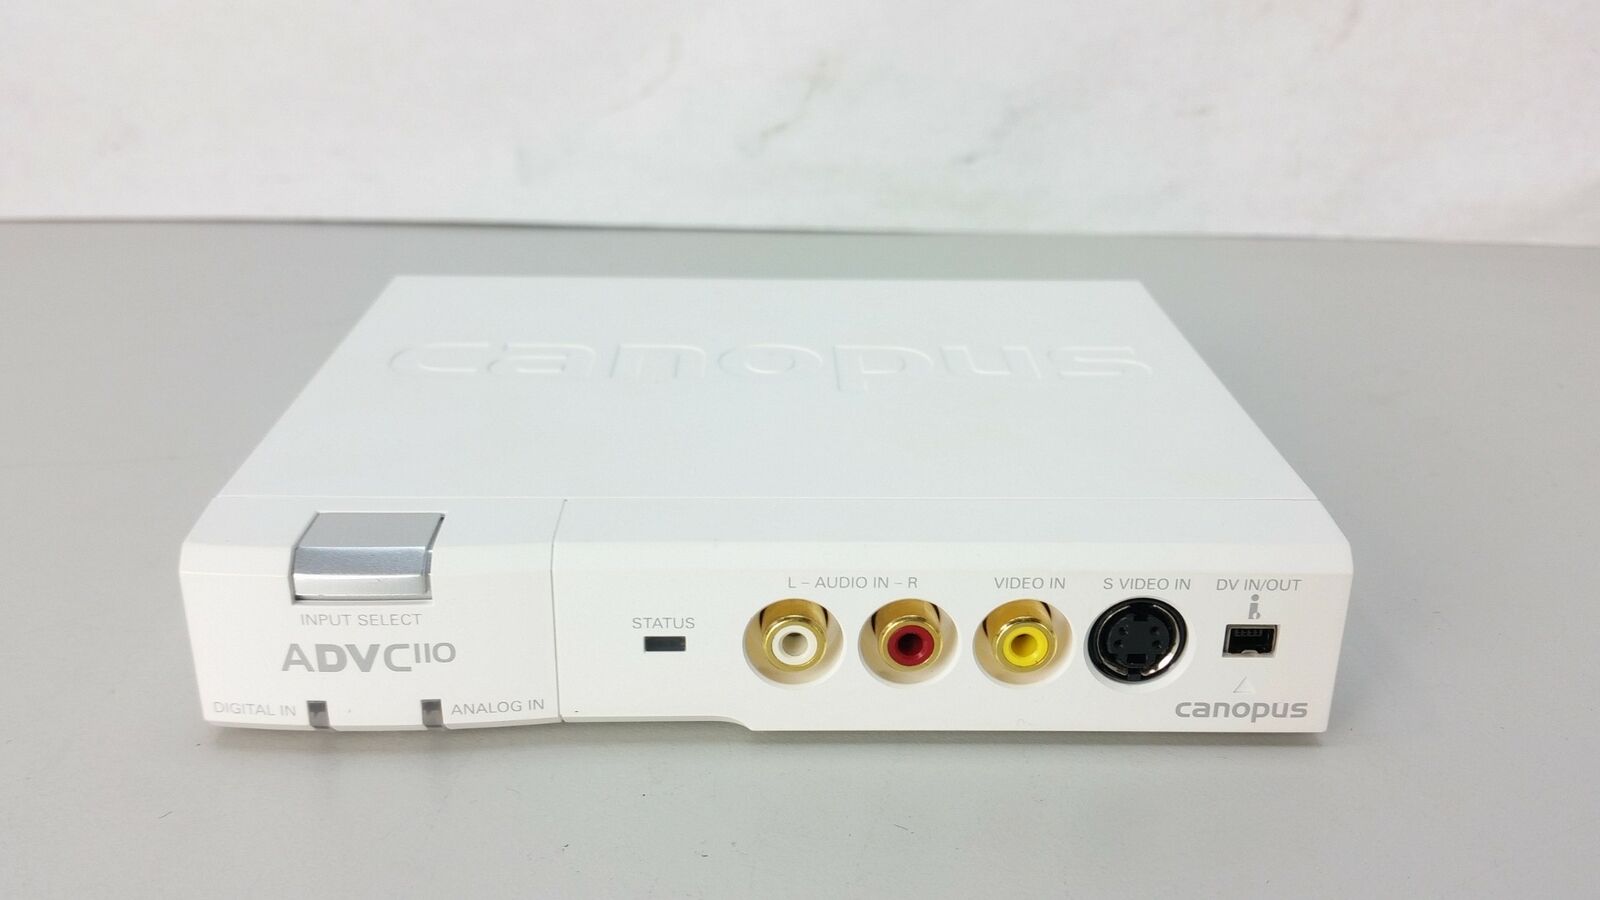 Canopus ADVC-110 Analog to Digital Video Converter